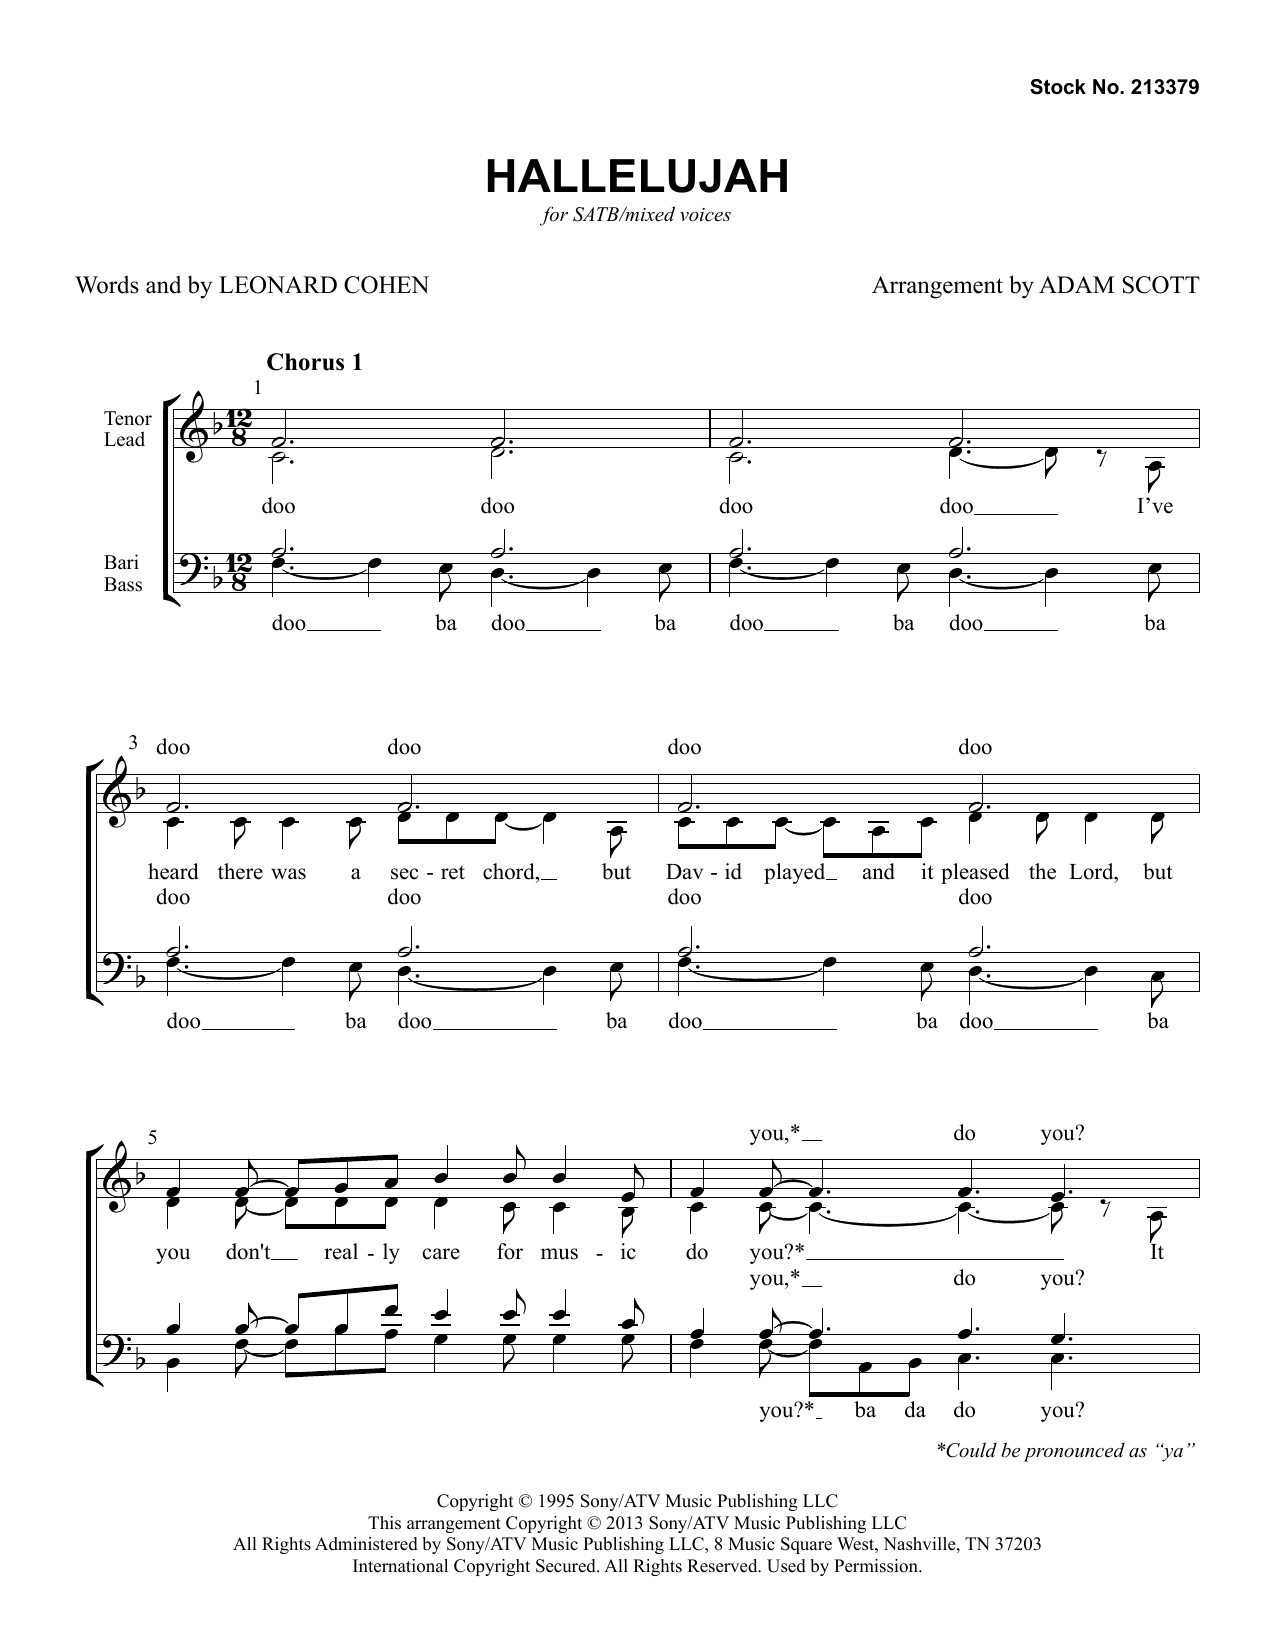 John Cale Hallelujah (arr. Adam Scott) Sheet Music Notes & Chords for SATB Choir - Download or Print PDF